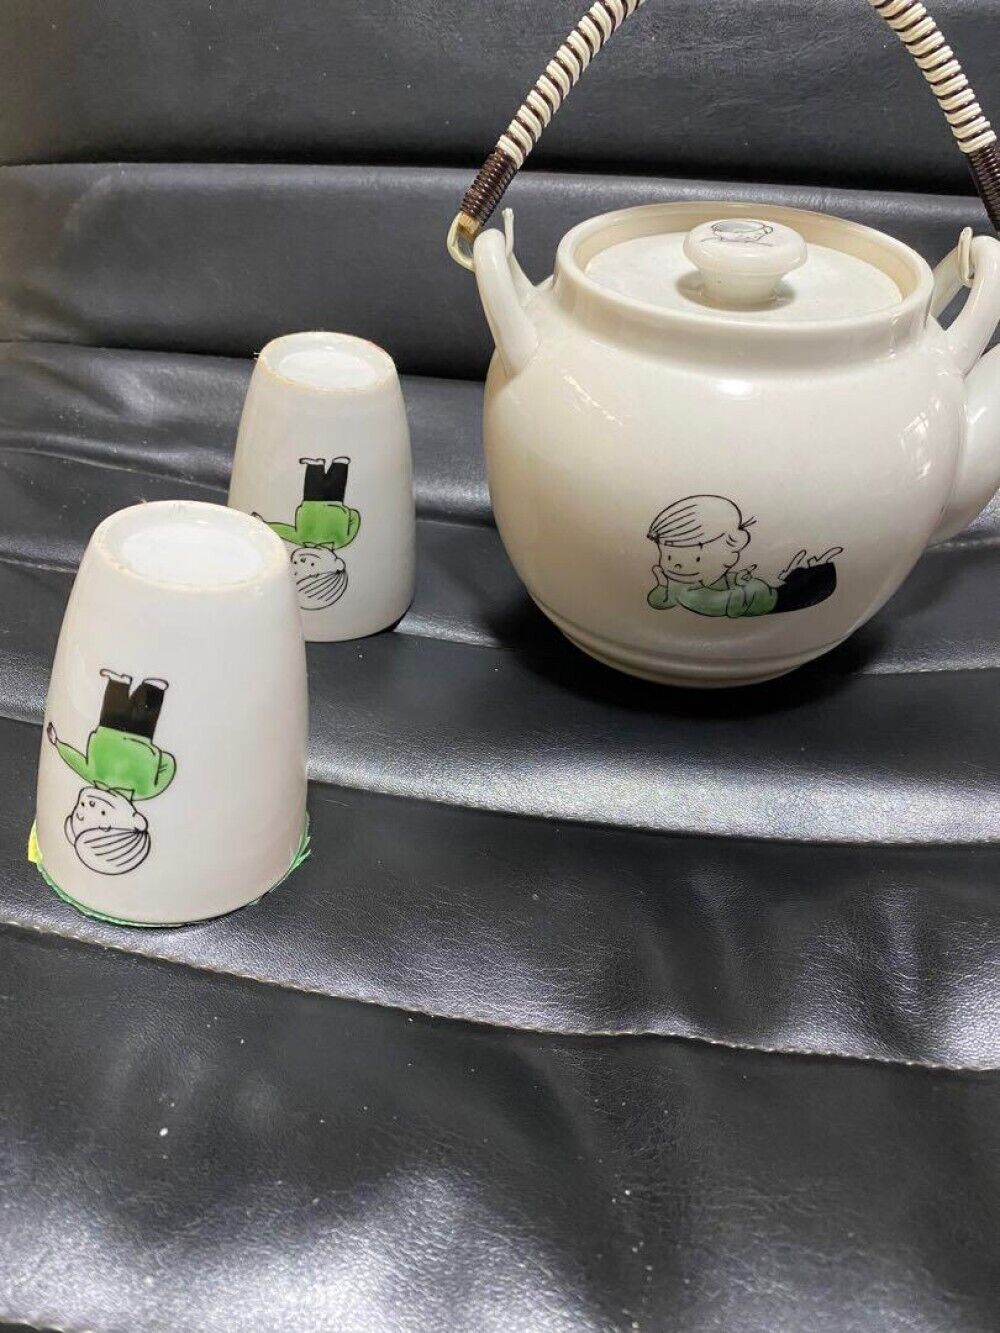 Sony boy yunomi & teapot teacup set of3 White